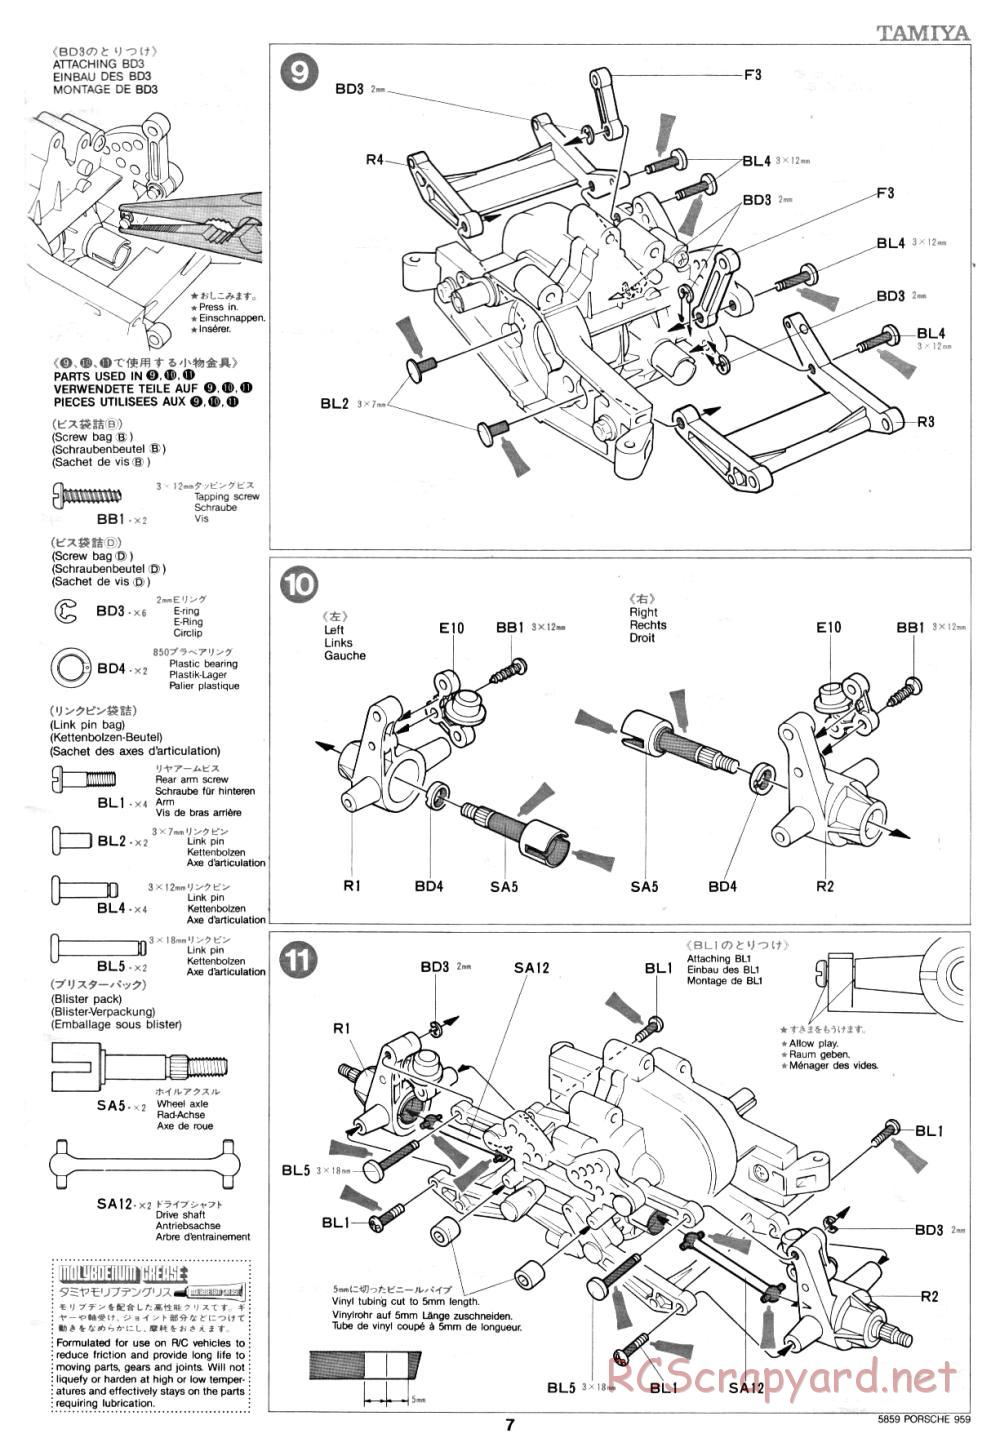 Tamiya - Porsche 959 - 58059 - Manual - Page 7